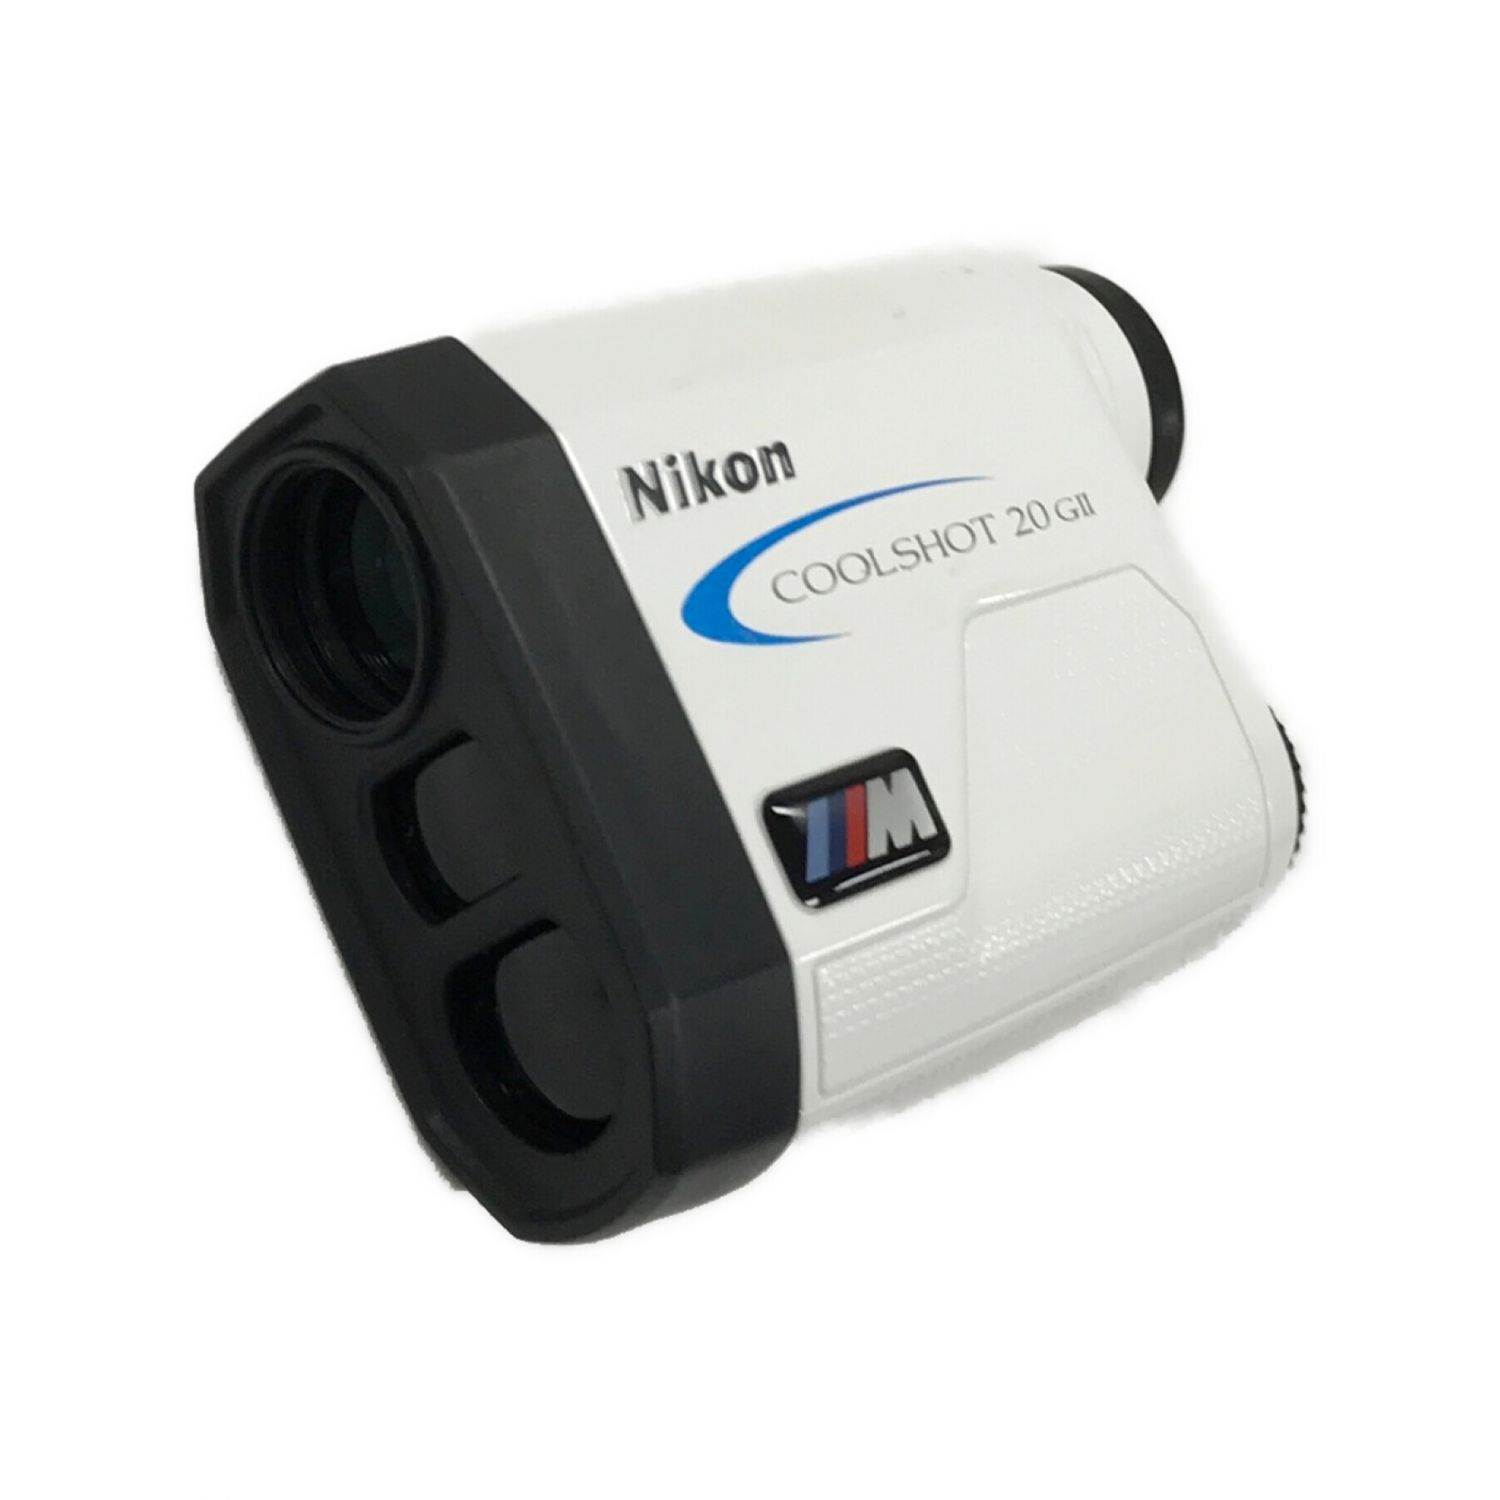 Nikon (ニコン) レーザー距離計 クールショット 20GII -｜トレファクONLINE